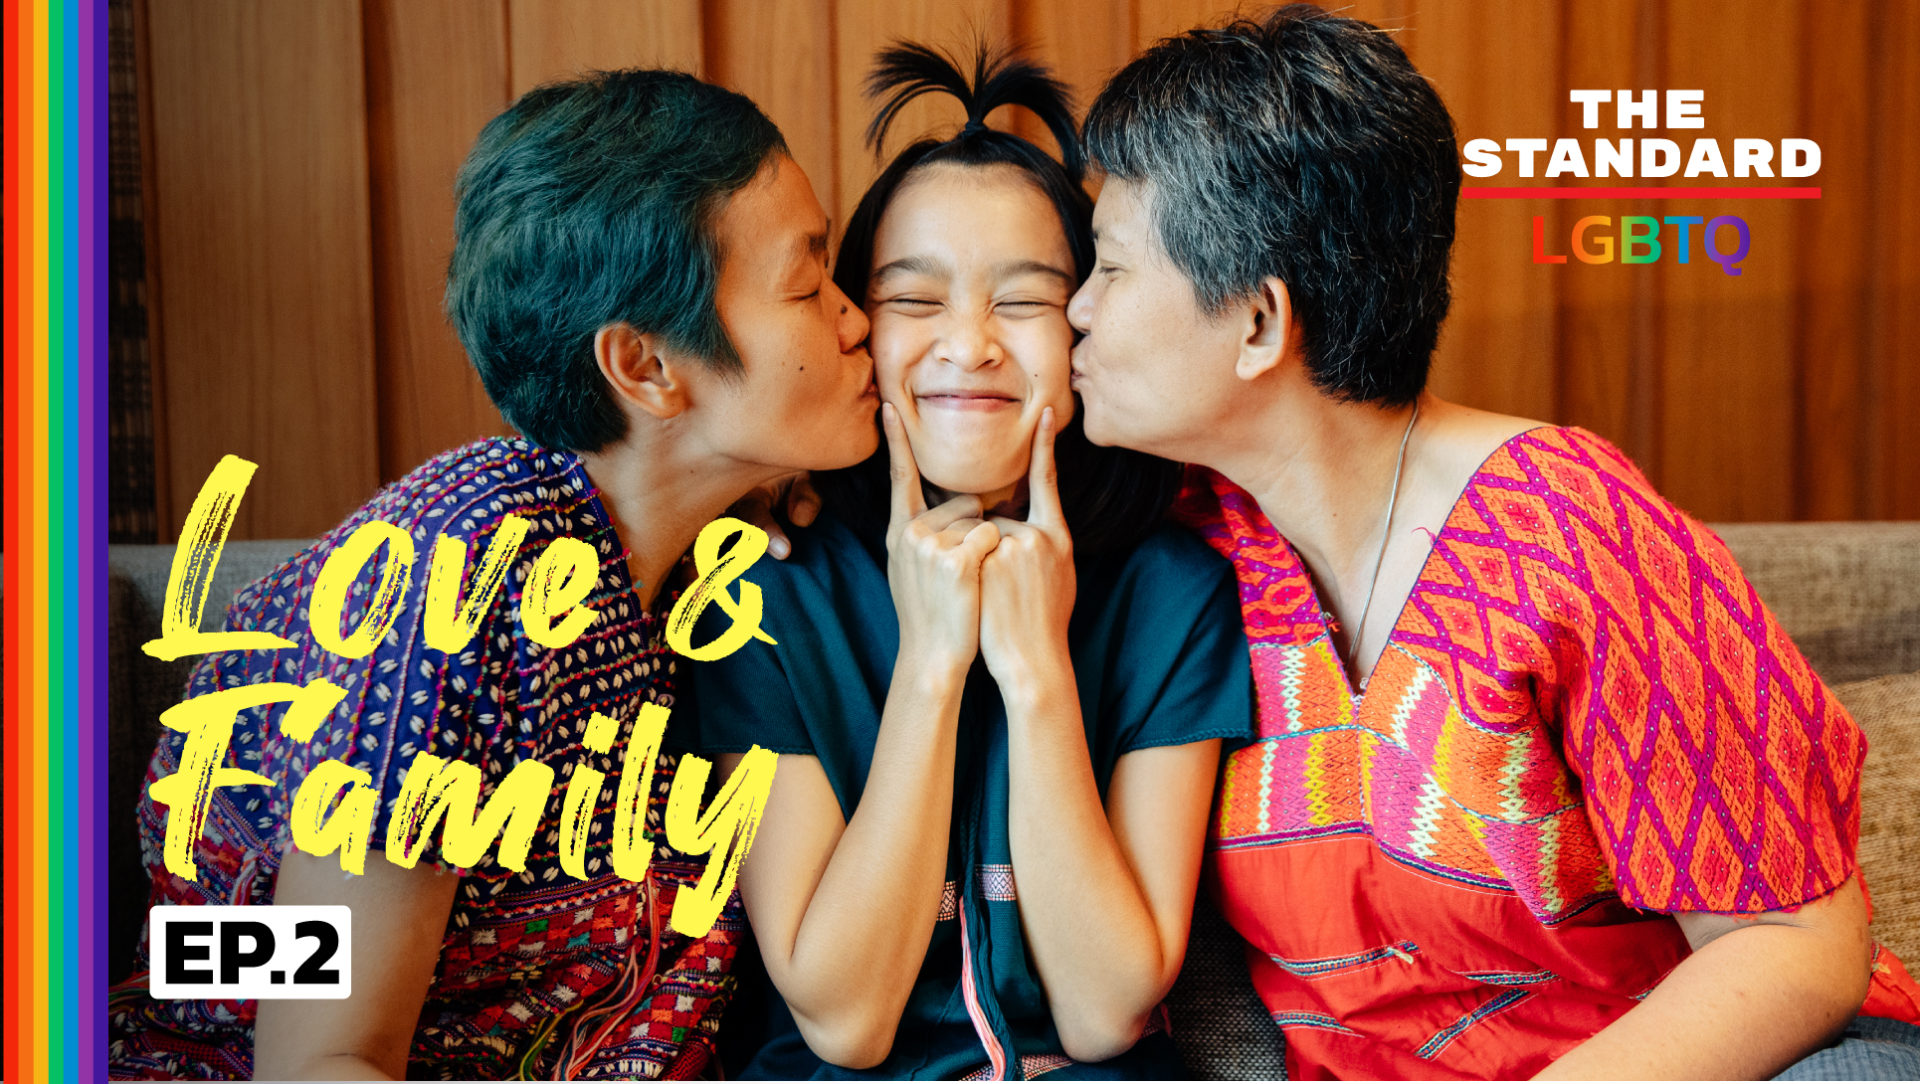 LGBTQ Love & Family Series EP.2